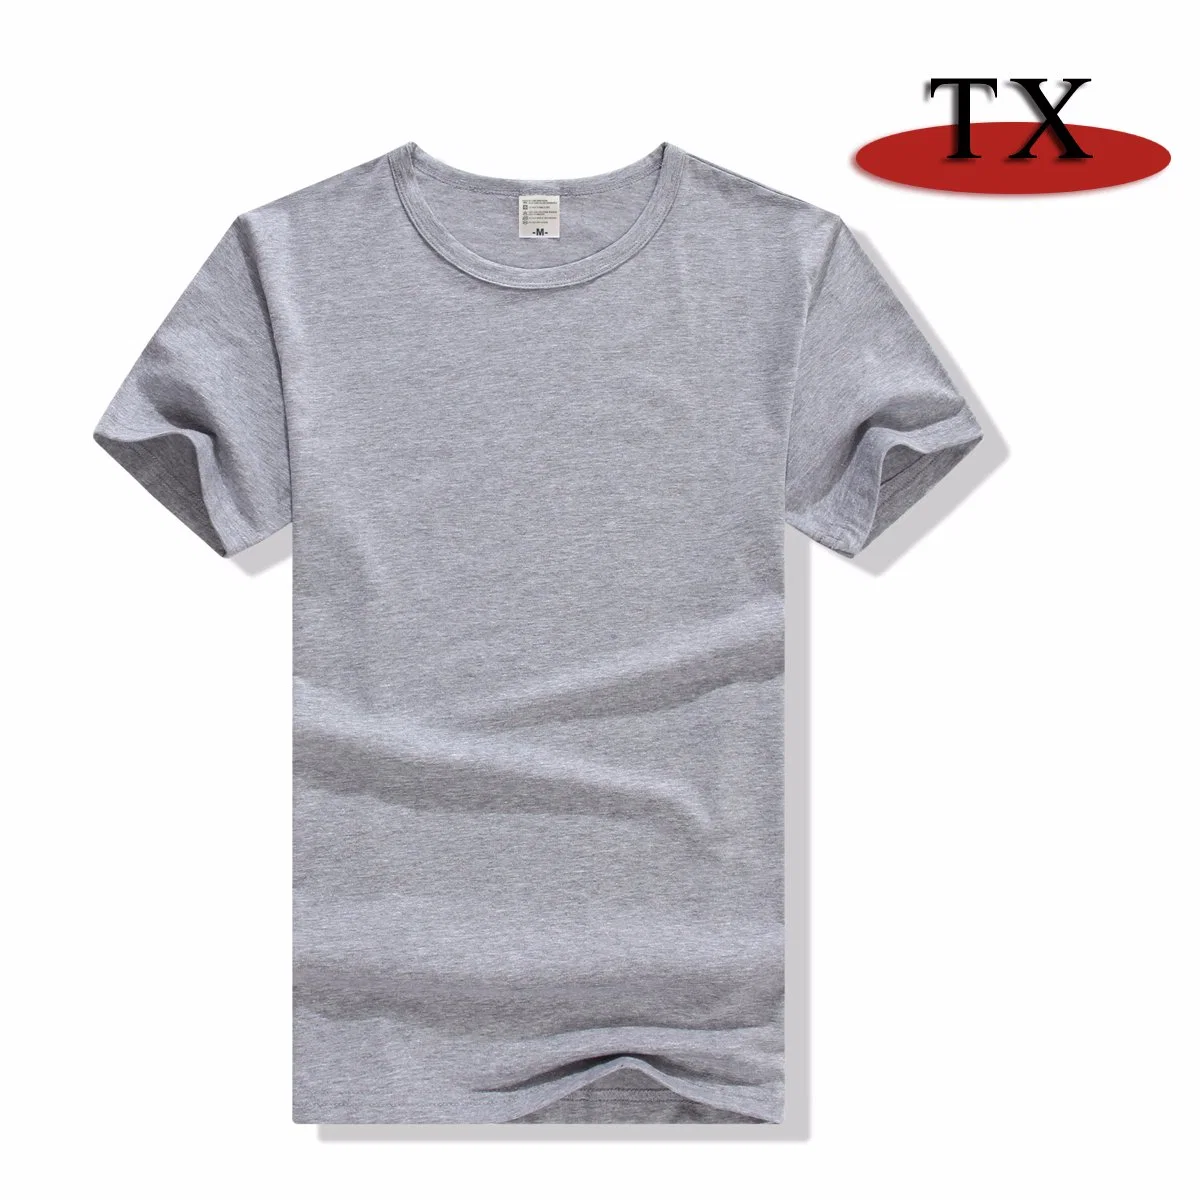 High Quality Breathable T-Shirt Comfortable Cotton Tee Shirt